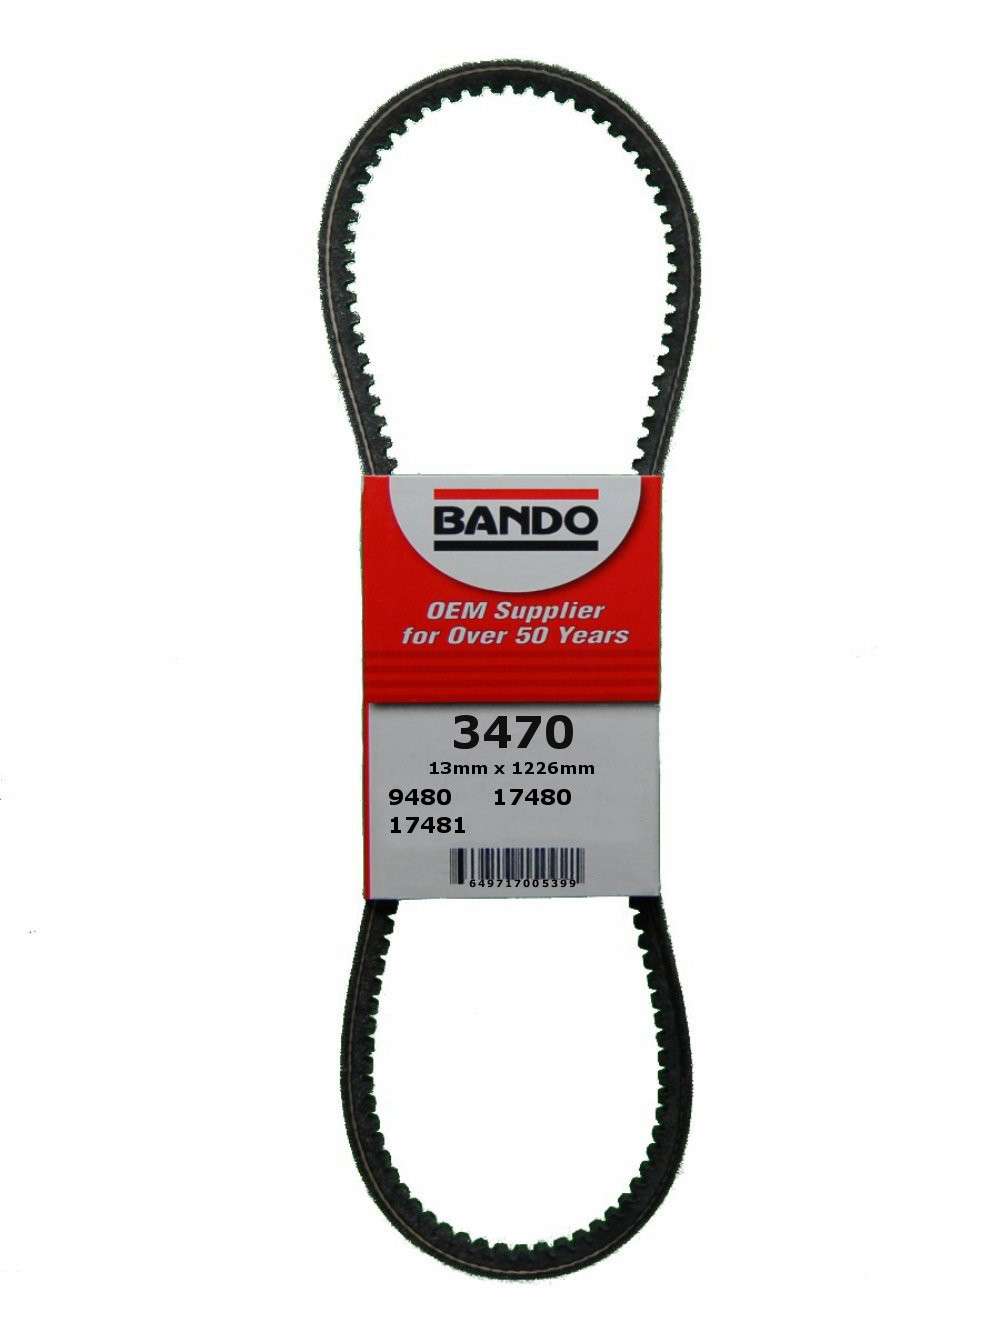 BANDO - RPF Precision Engineered Raw Edge Cogged V-Belt - Part Number 3470  - Fulfillment By Sophio  fbssophiocom